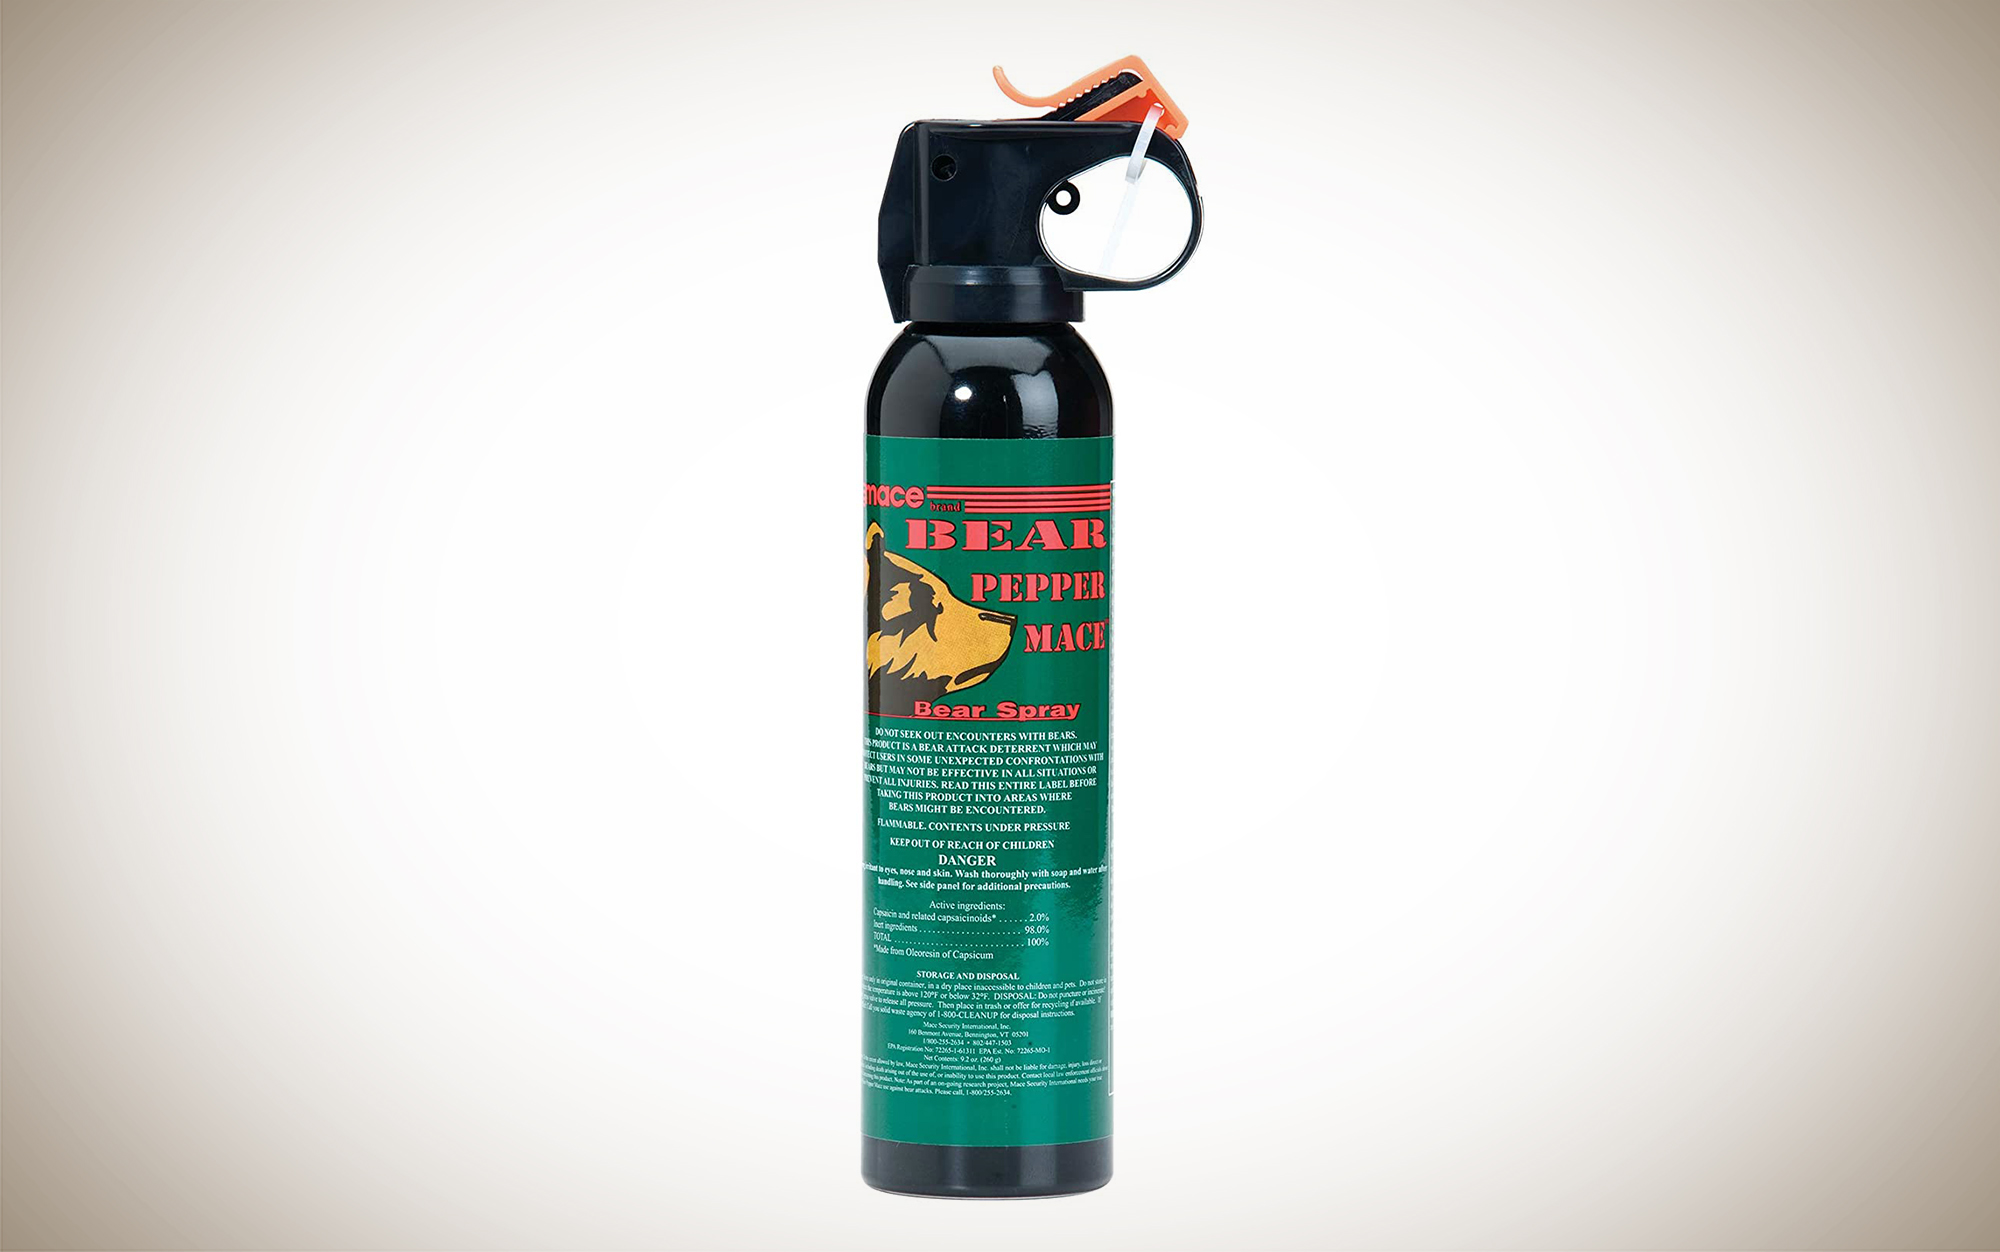 Mace Bear Spray is a bear pepper spray that sprays up to 35 feet away.